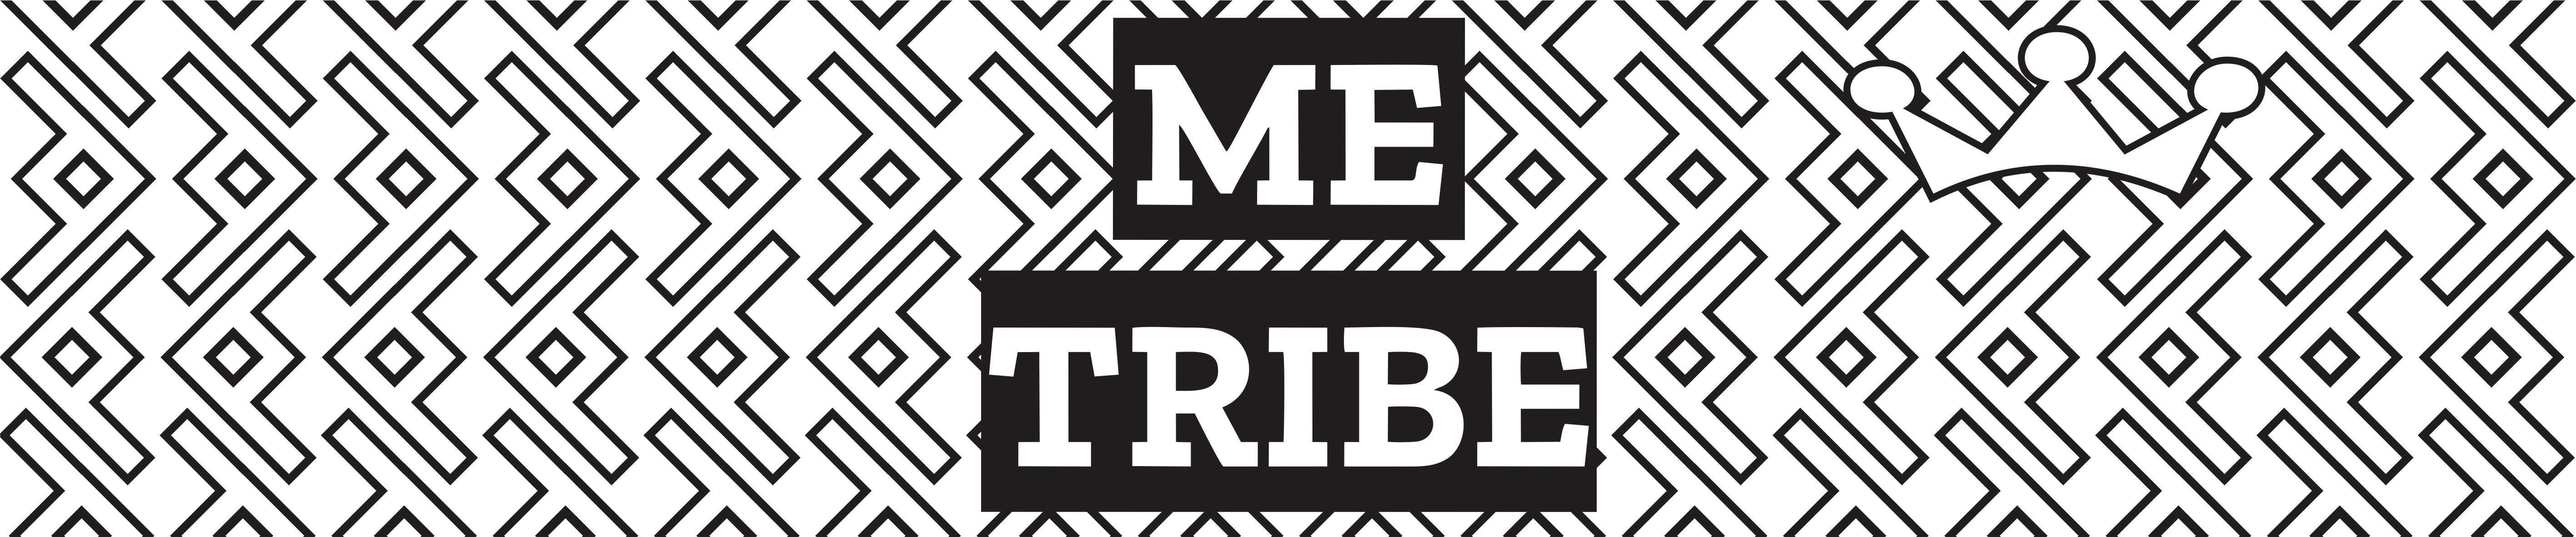 Me Tribe